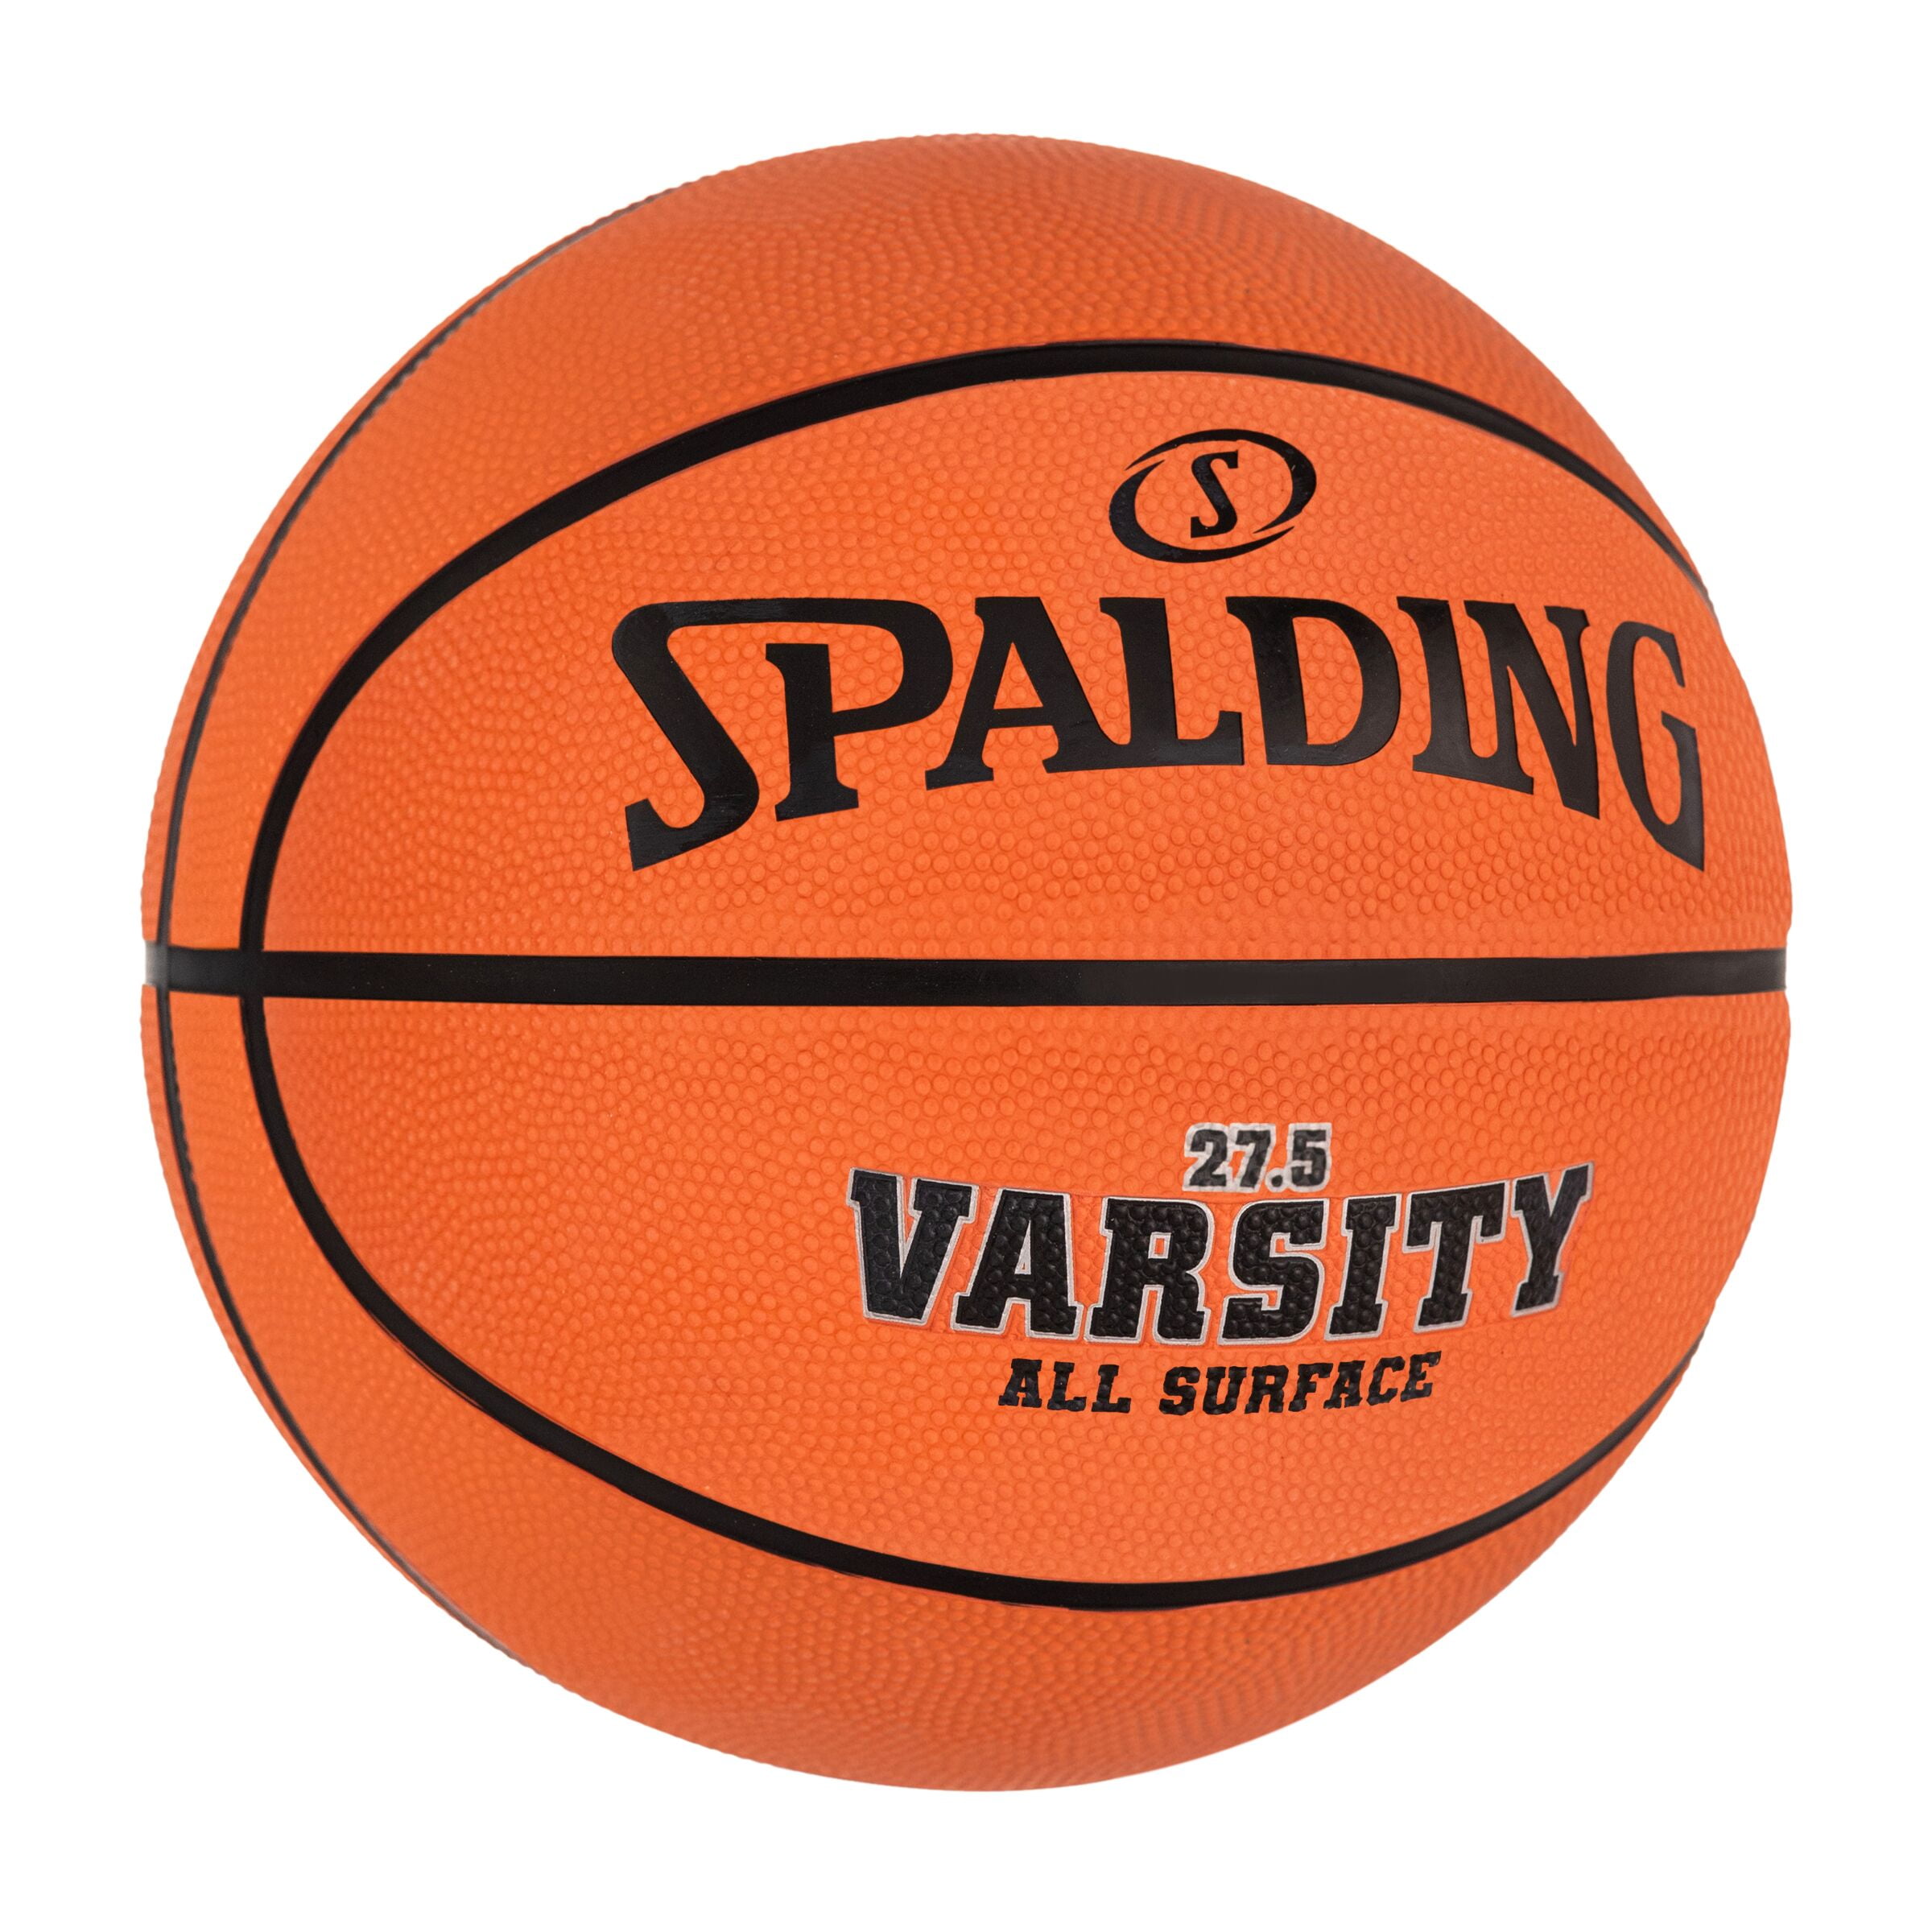 Spalding 27.5 Varsity Basketball - Blue/Light Blue 1 ct